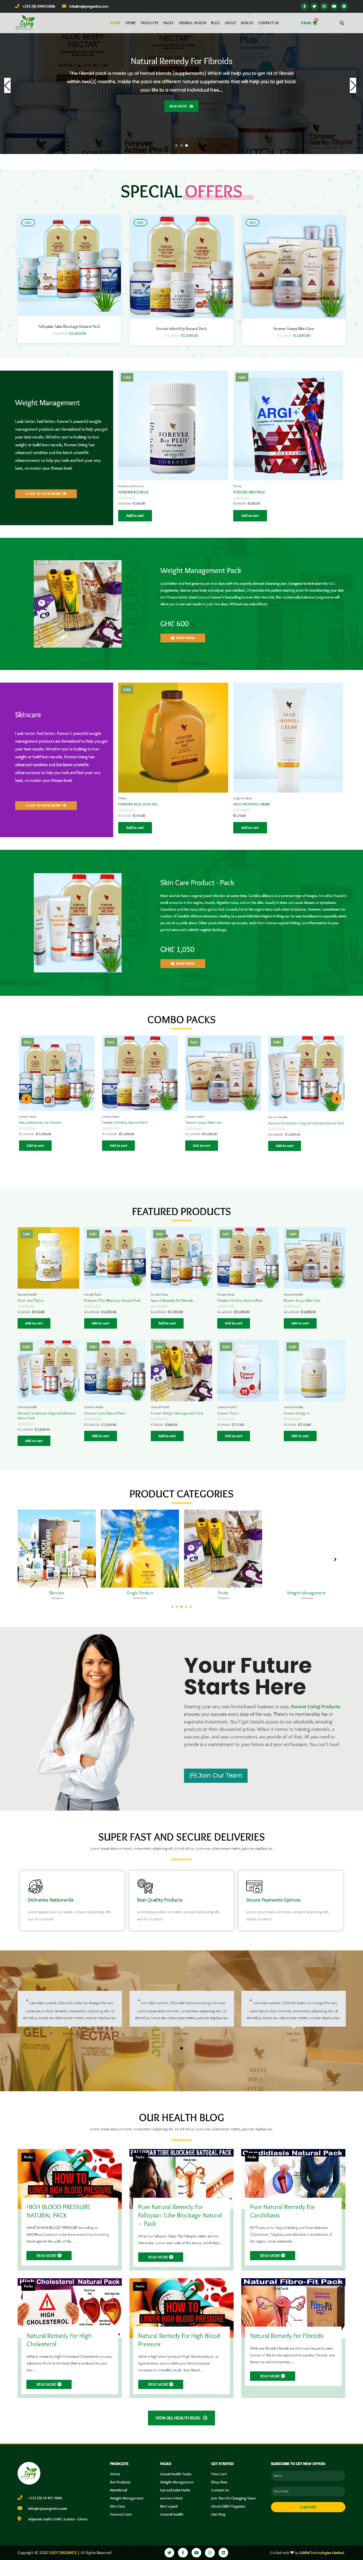 An Ecommerce Organic Online Shop | Uddfel Technologies Limited